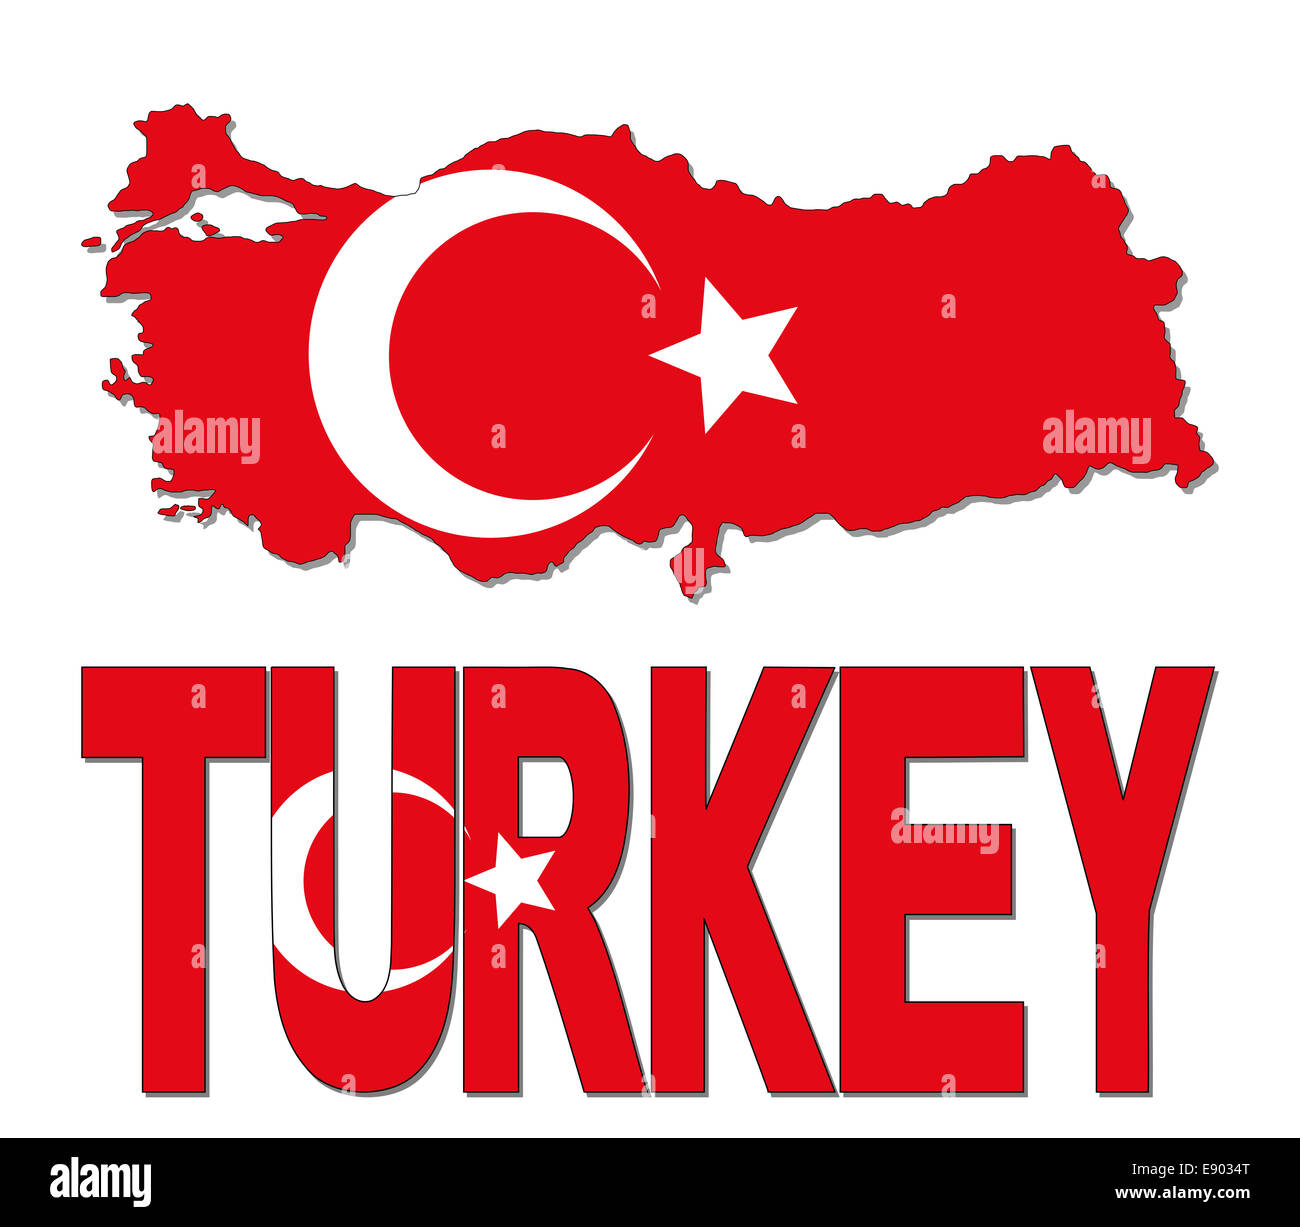 Turkey map flag and text illustration Stock Photo